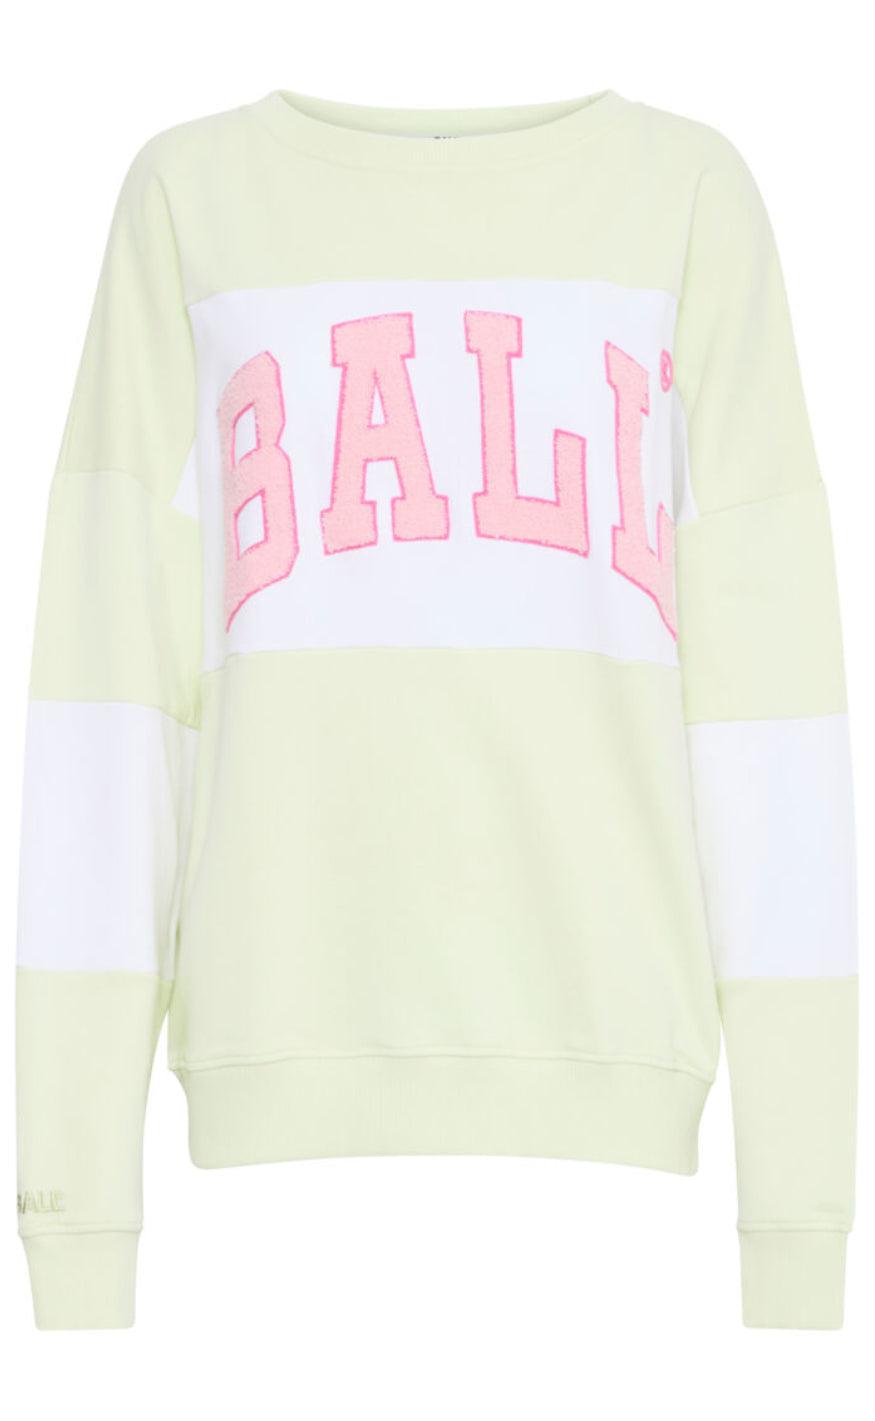 Se BALL Original Sweatshirt - O. Zidney - Lemonade hos Fashionbystrand